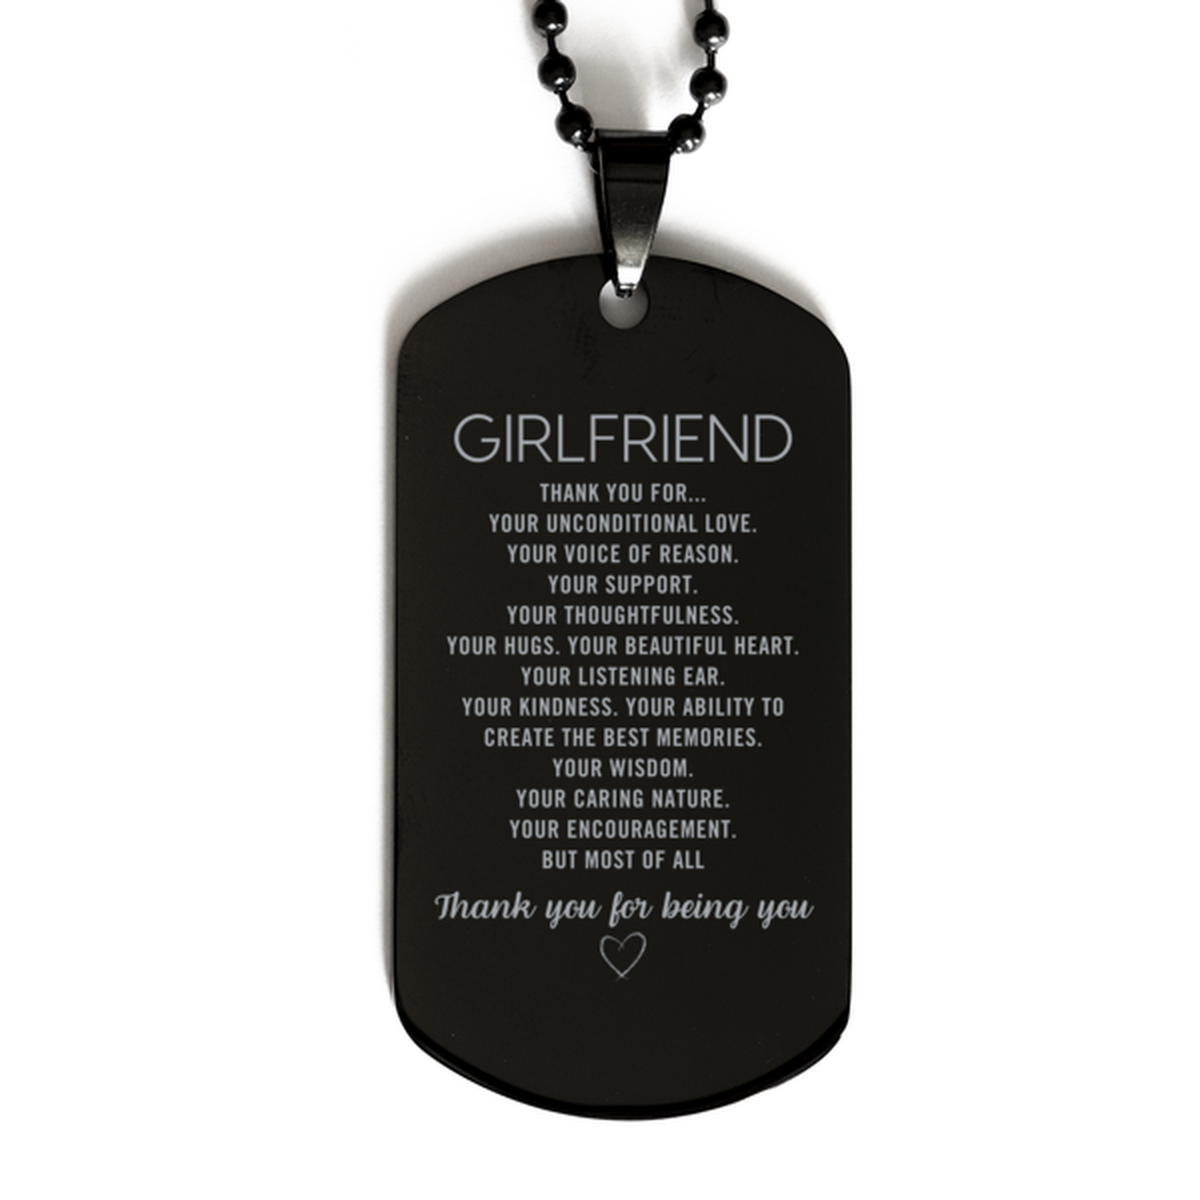 Girlfriend Black Dog Tag Custom, Engraved Gifts For Girlfriend Christmas Graduation Birthday Gifts for Men Women Girlfriend Thank you for Your unconditional love